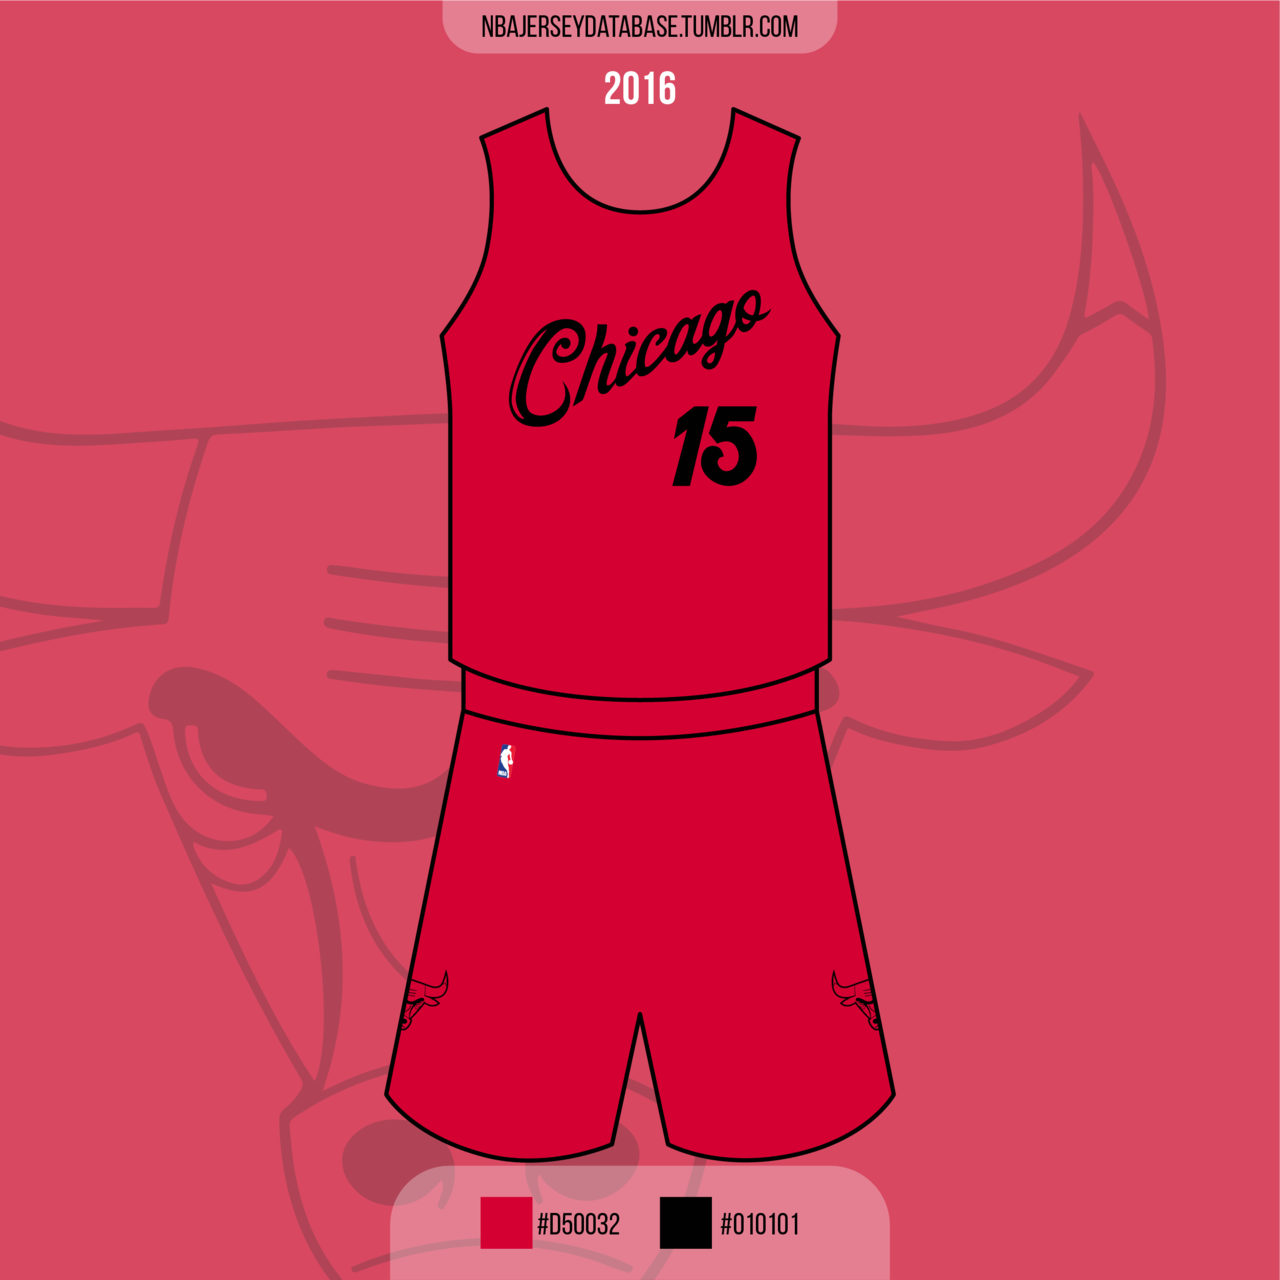 chicago bulls jersey 2016